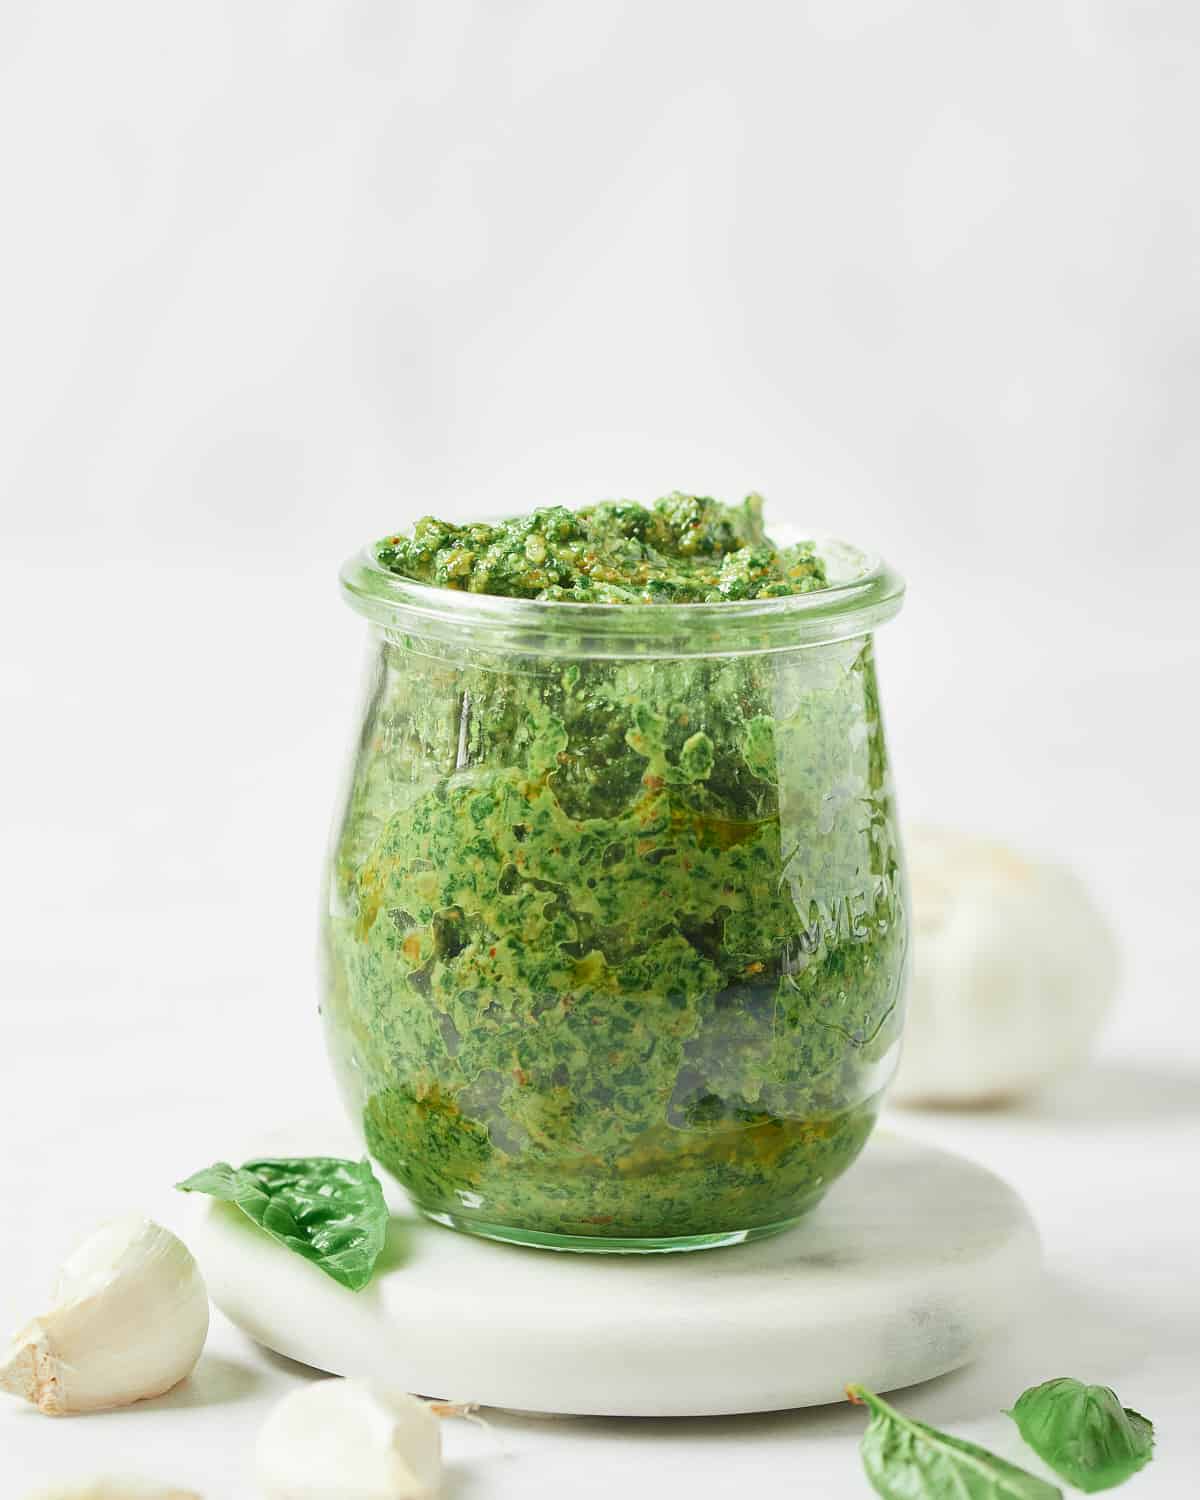 Side view of Vegan Walnut Pesto in glass jar with basil and garlic nearby.